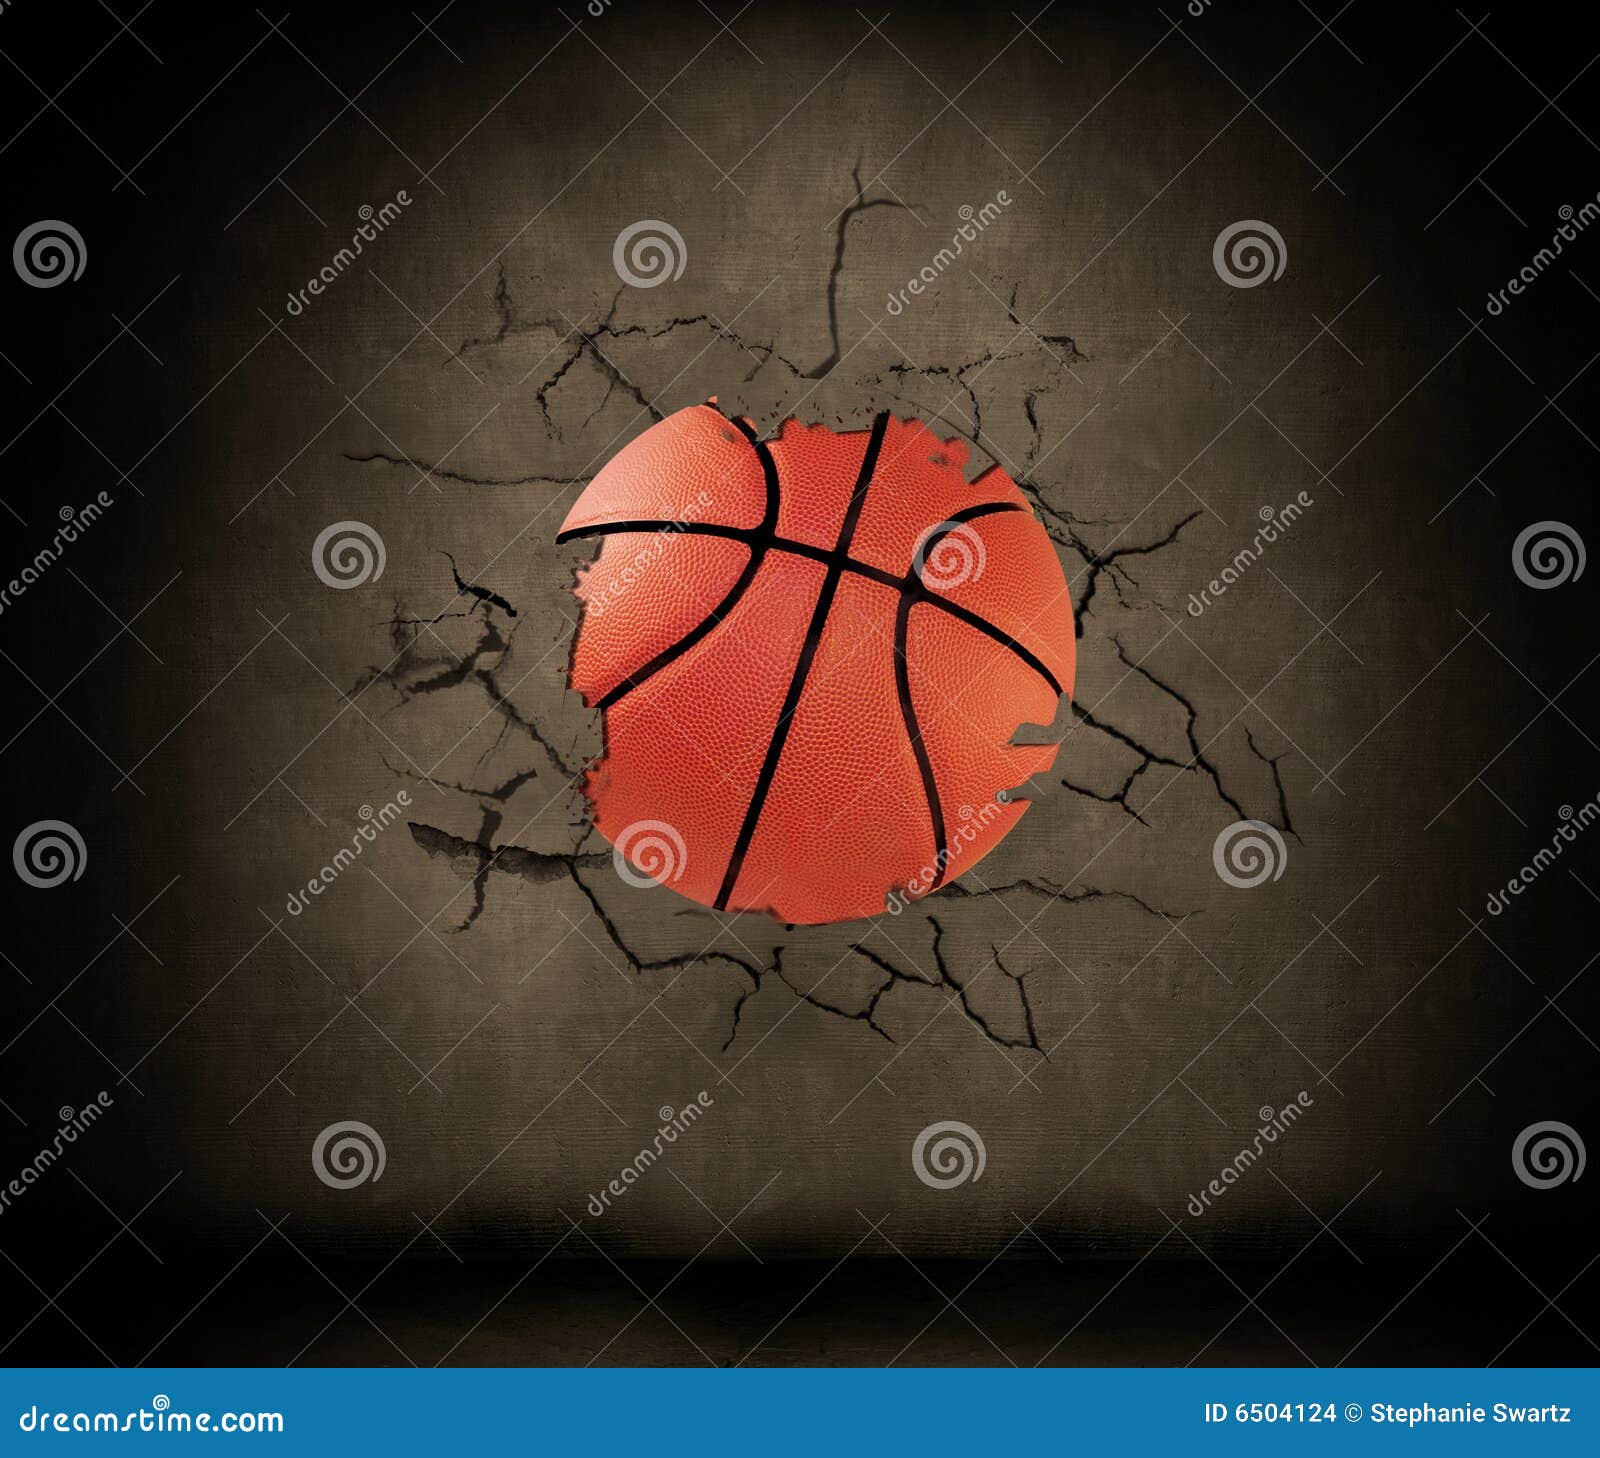 basketball wedged